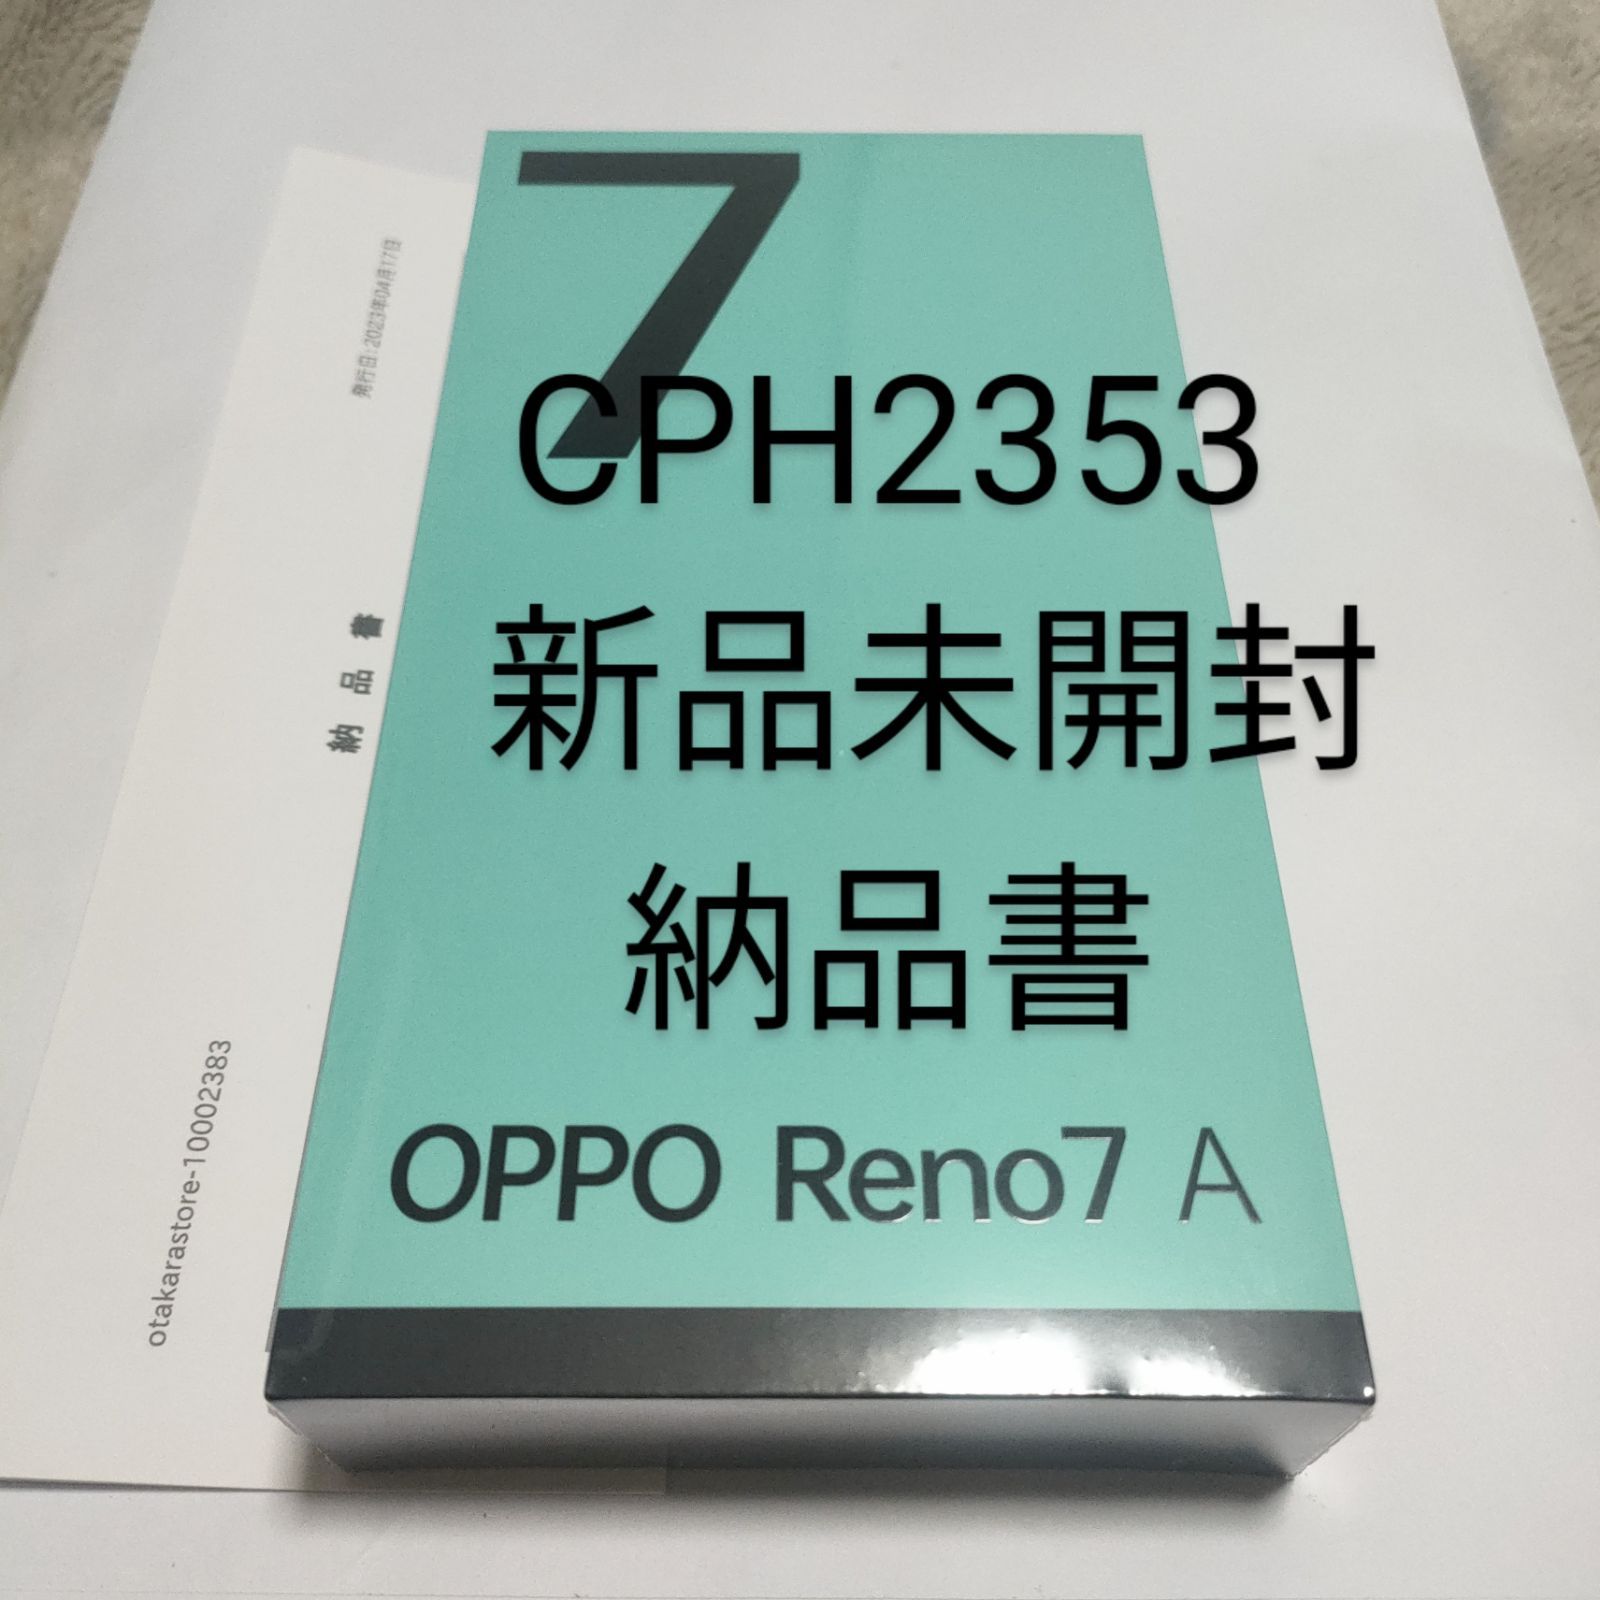 OPPO Reno7 A SIMフリー CPH2353 ドリームブルー 新品 未開封 Dual SIM